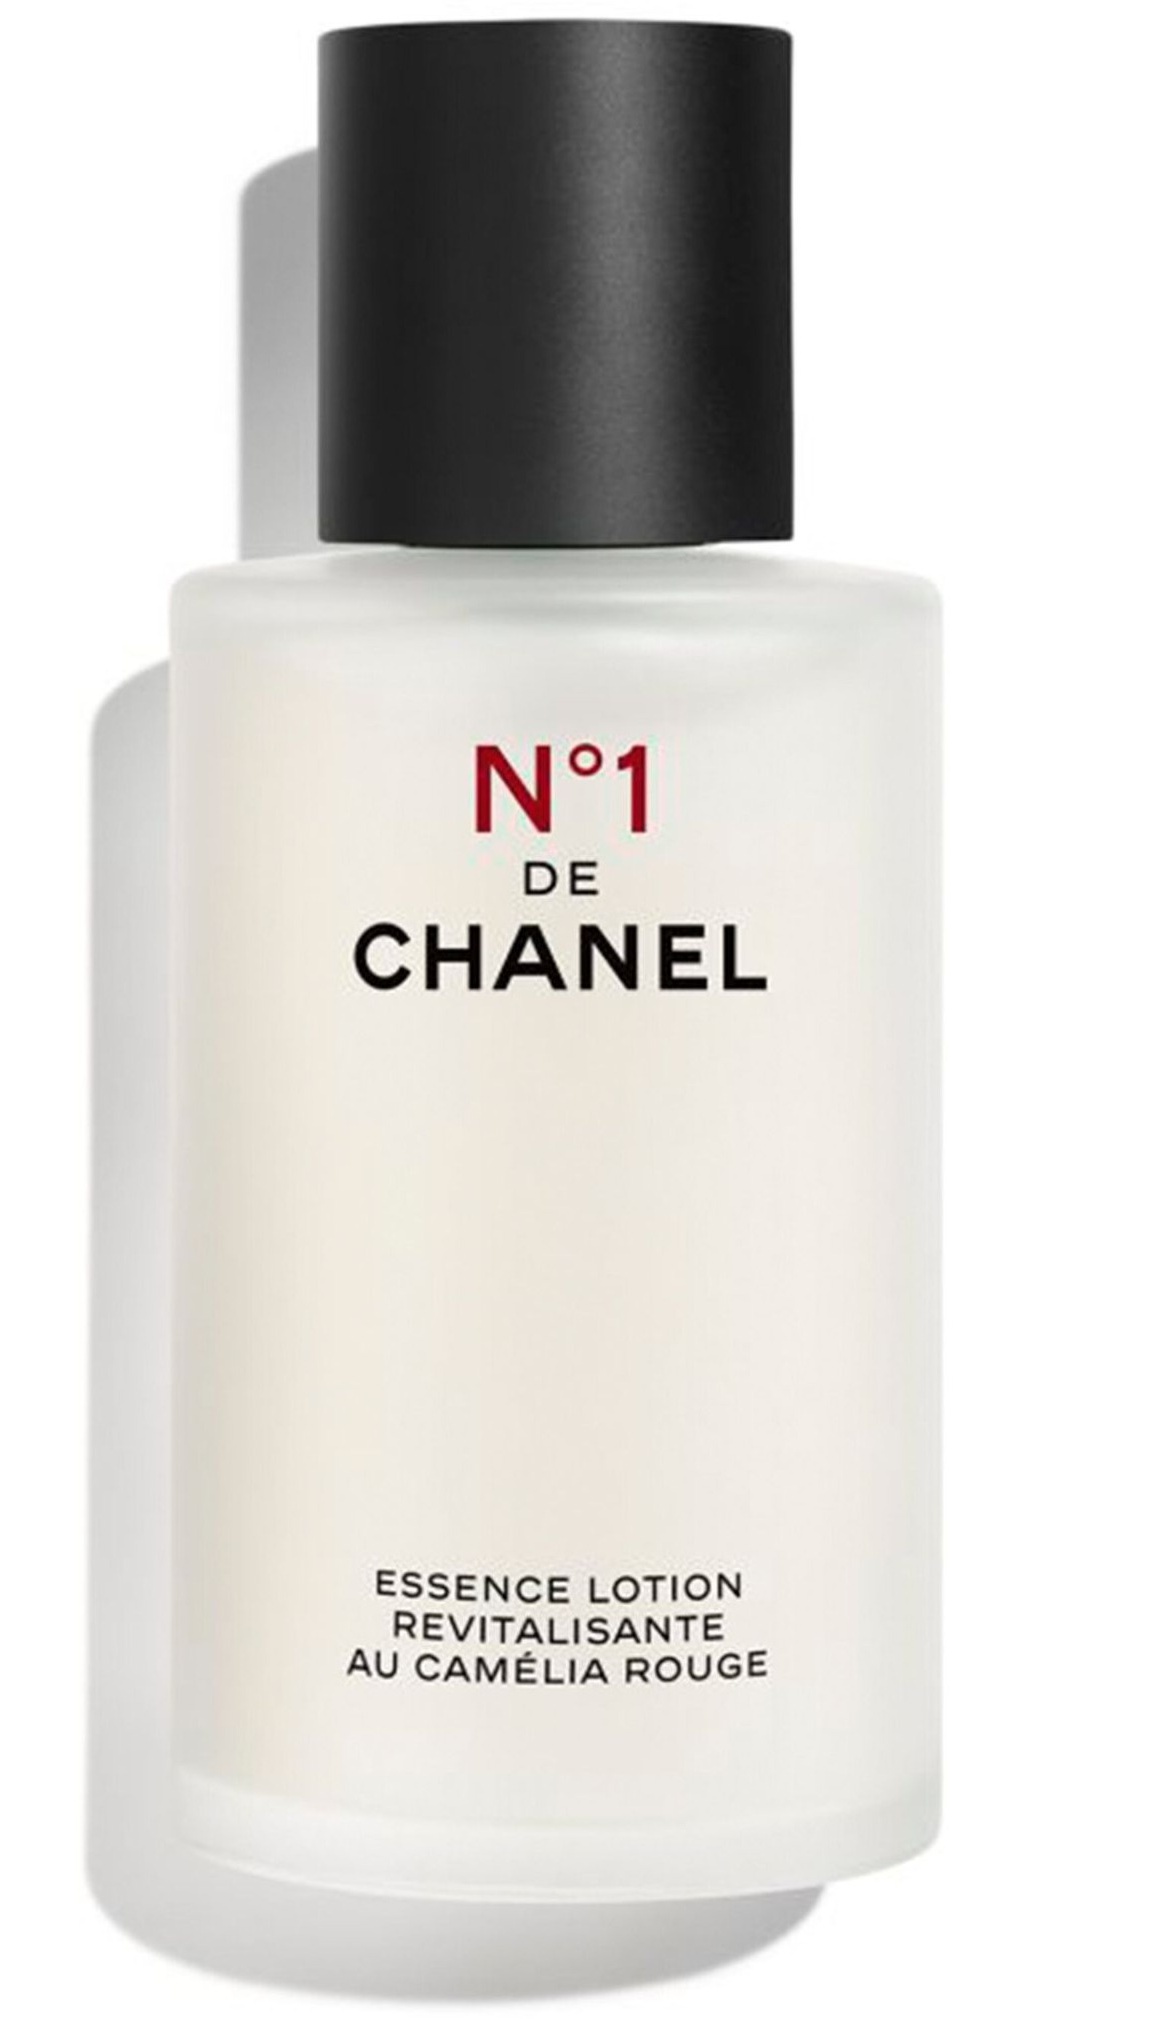 Chanel N°1 De Chanel Red Camellia Revitalizing Essence Lotion